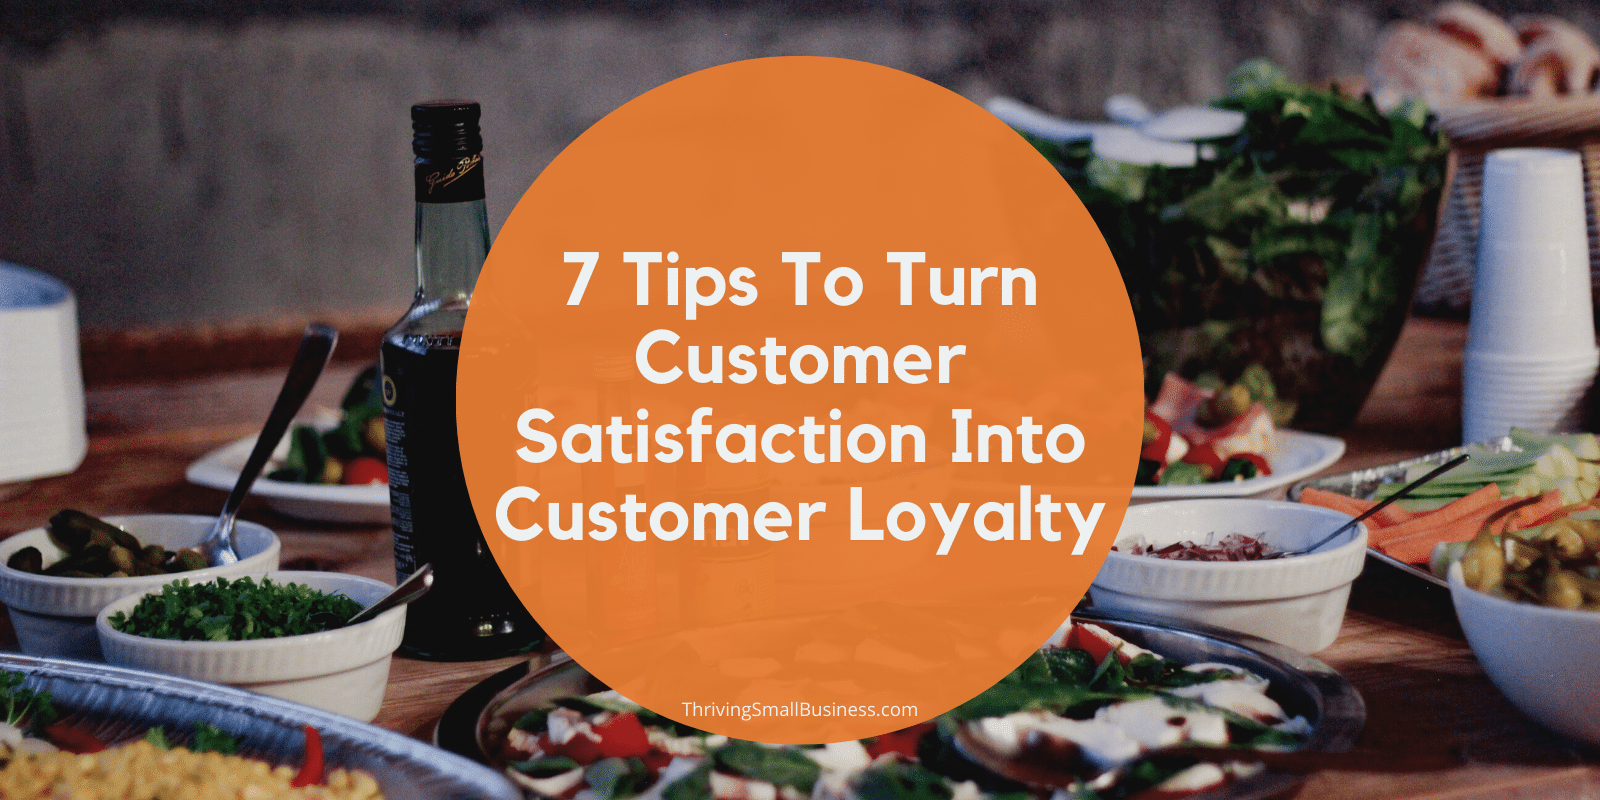 How to create customer loyalty